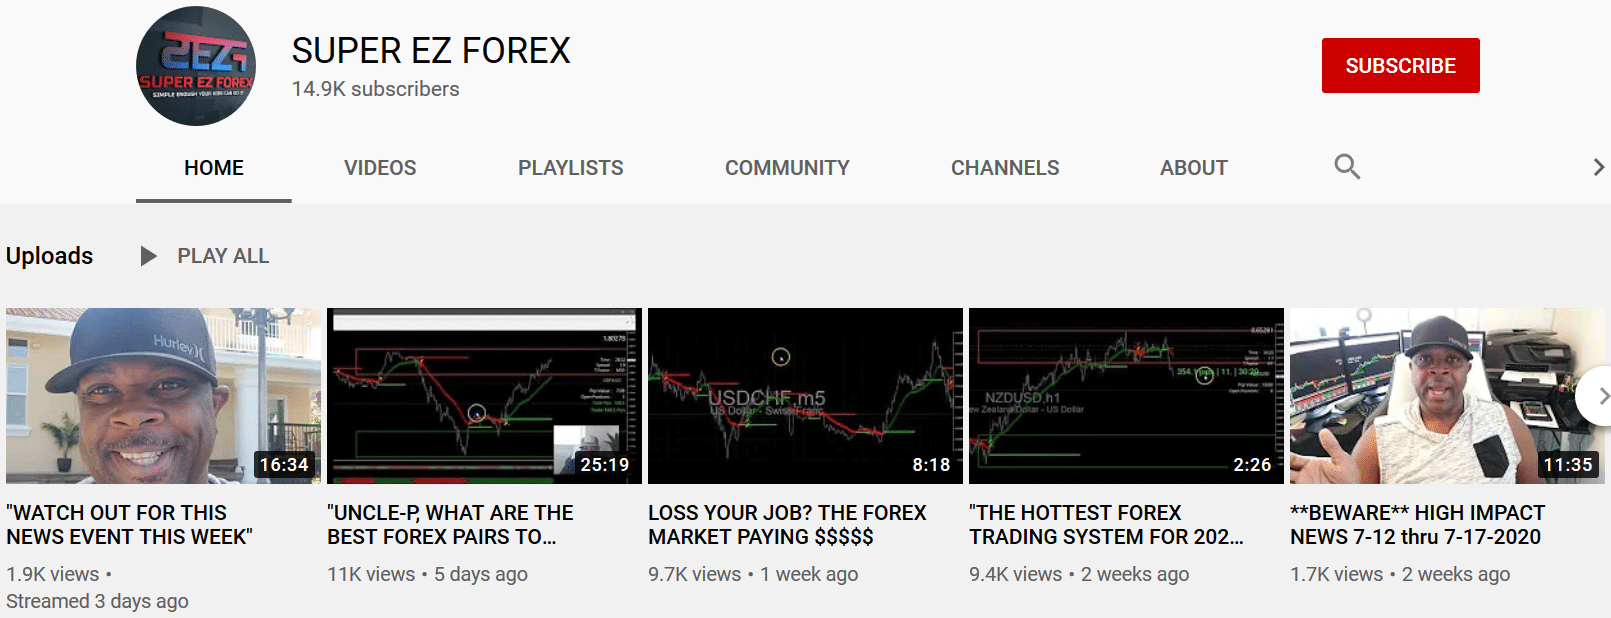 Super EZ Forex - YouTube channel